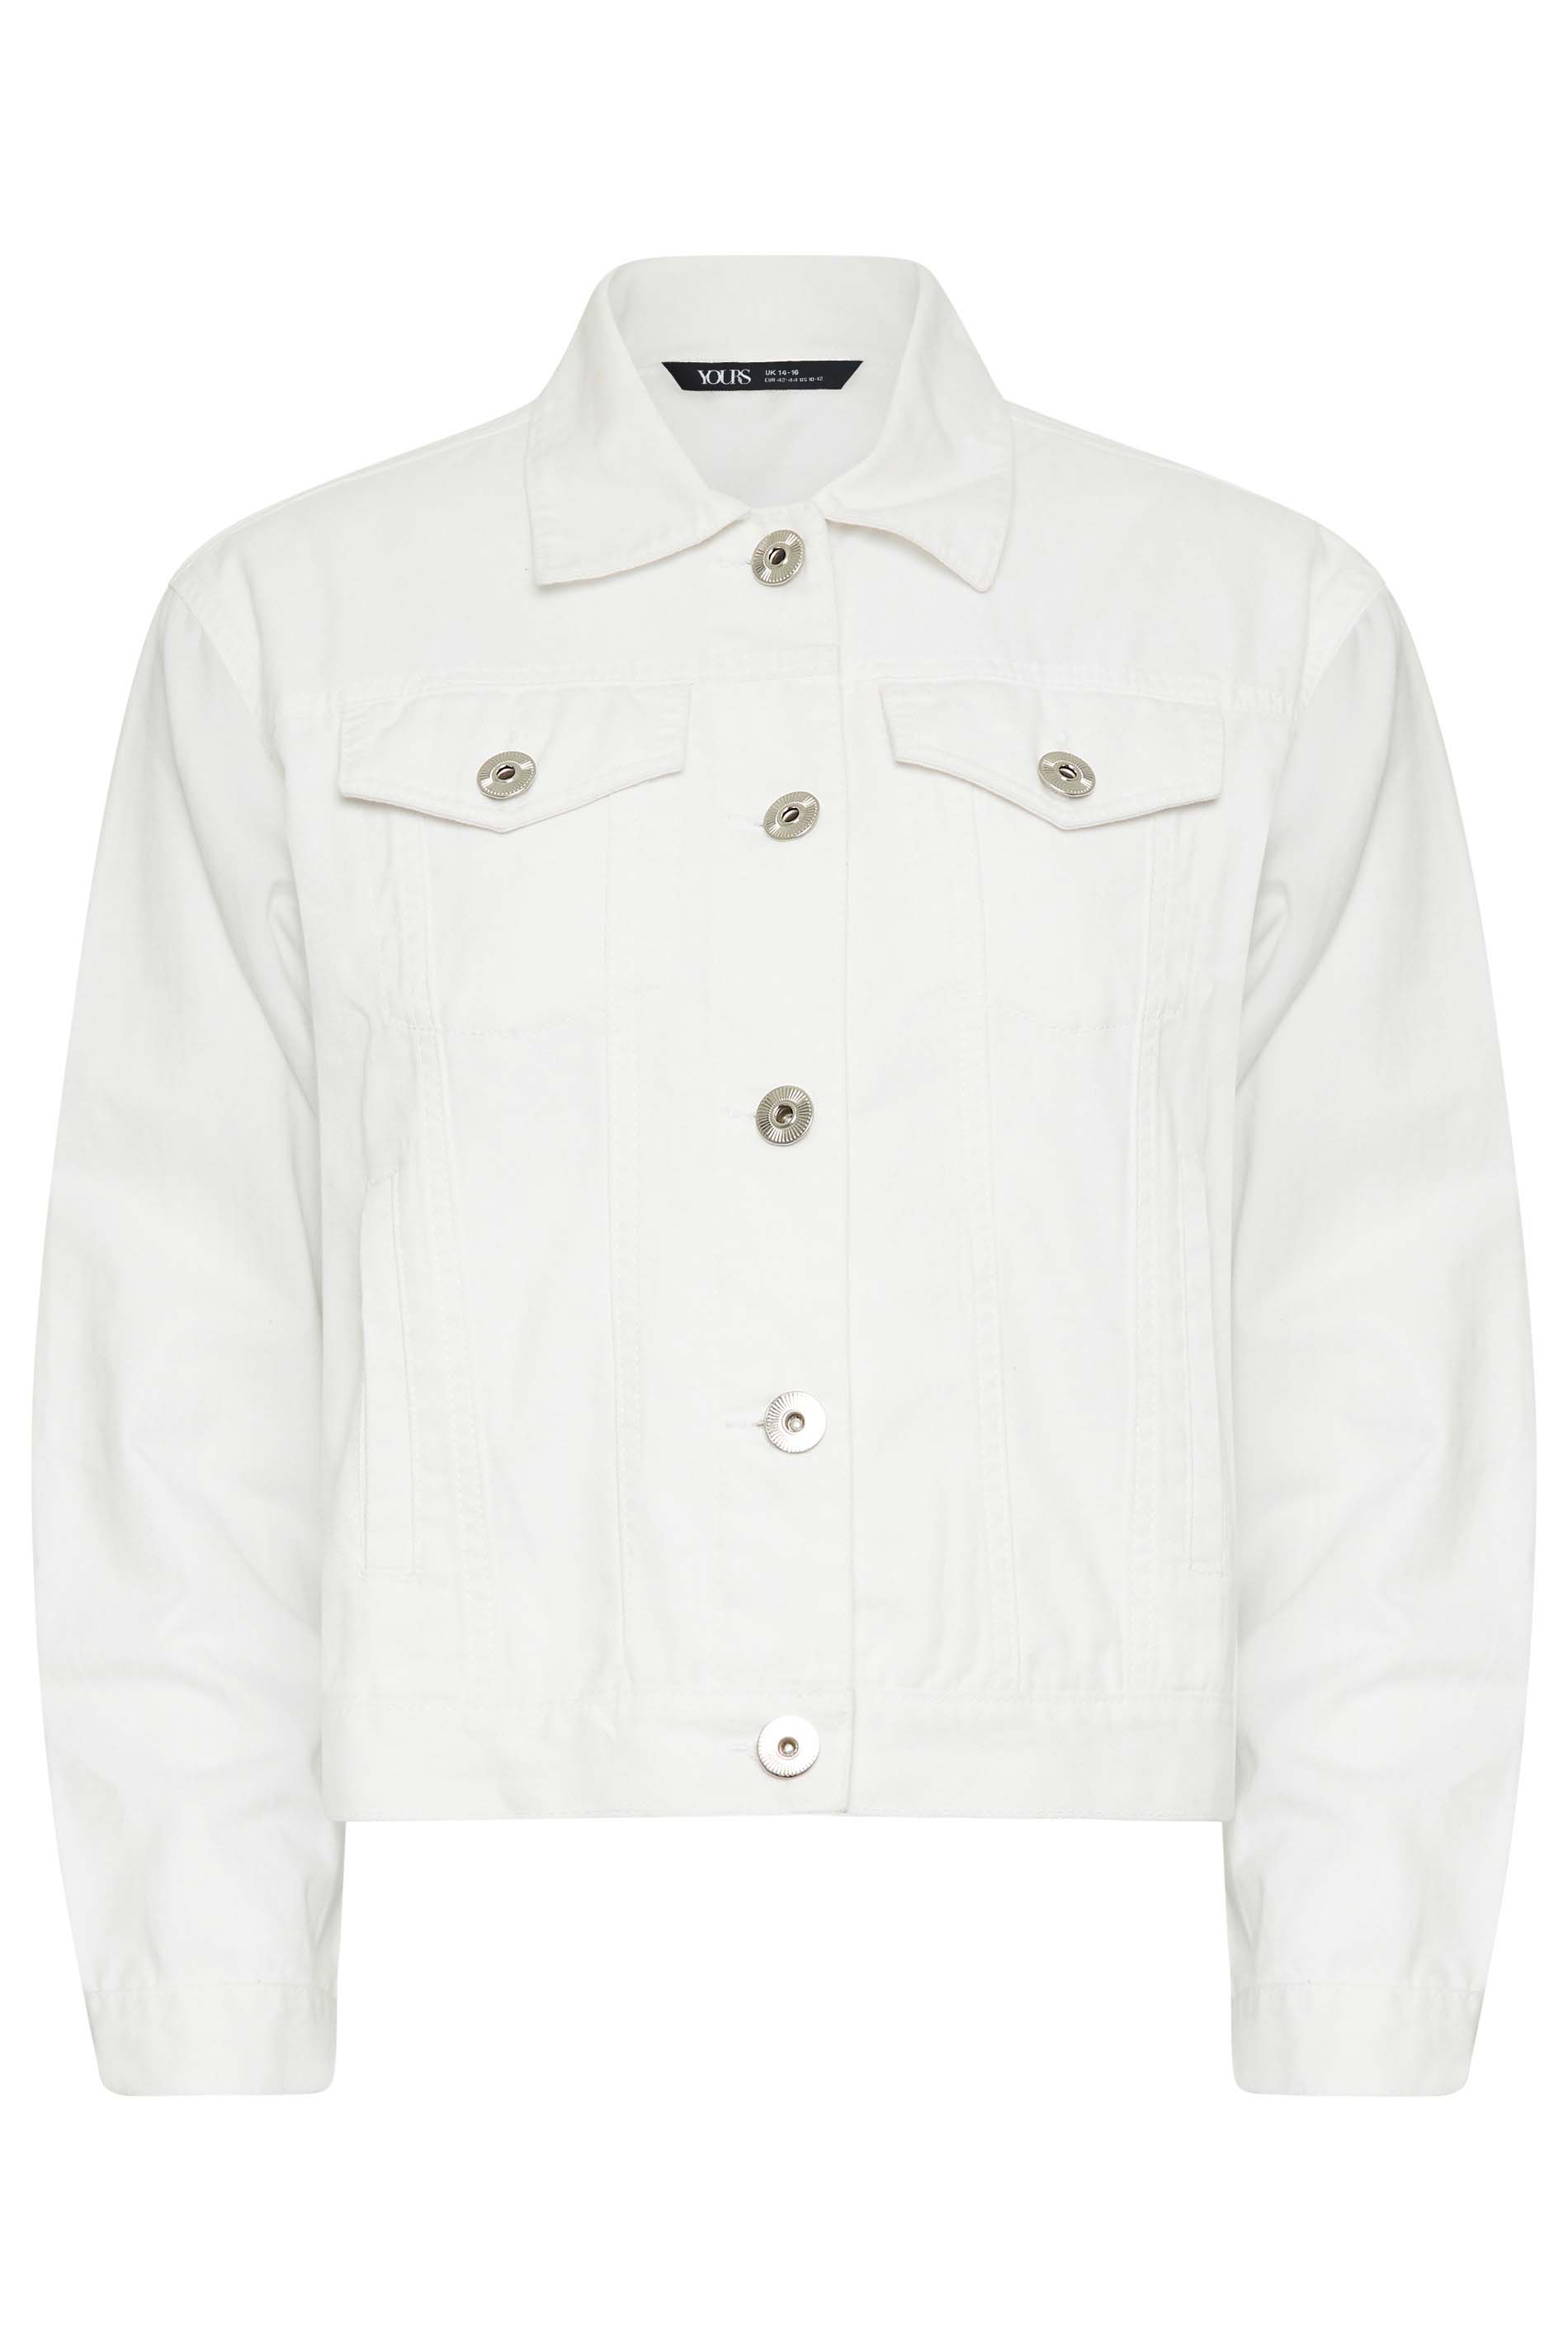 Yours Petite Curve White Denim Jacket, Women's Curve & Plus Size, Yours product